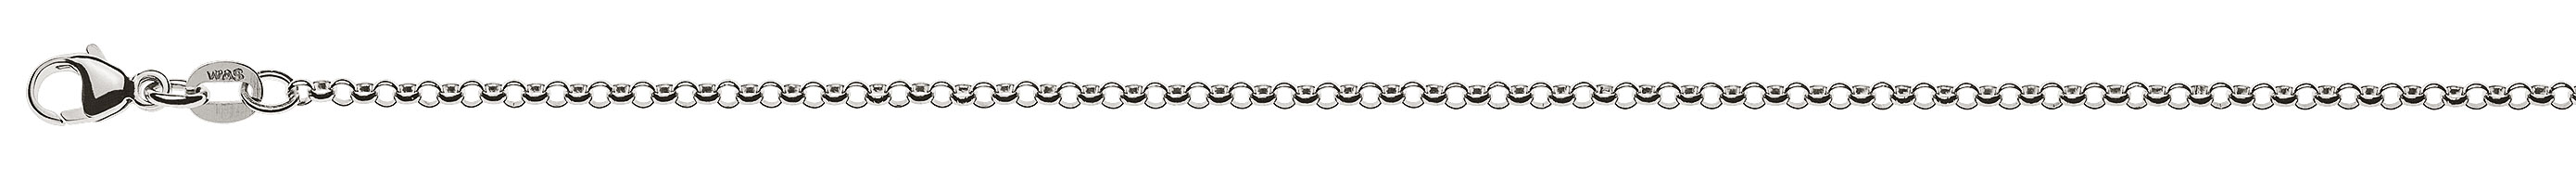 AURONOS Prestige Necklace white gold 18K pea chain 55cm 2.0mm